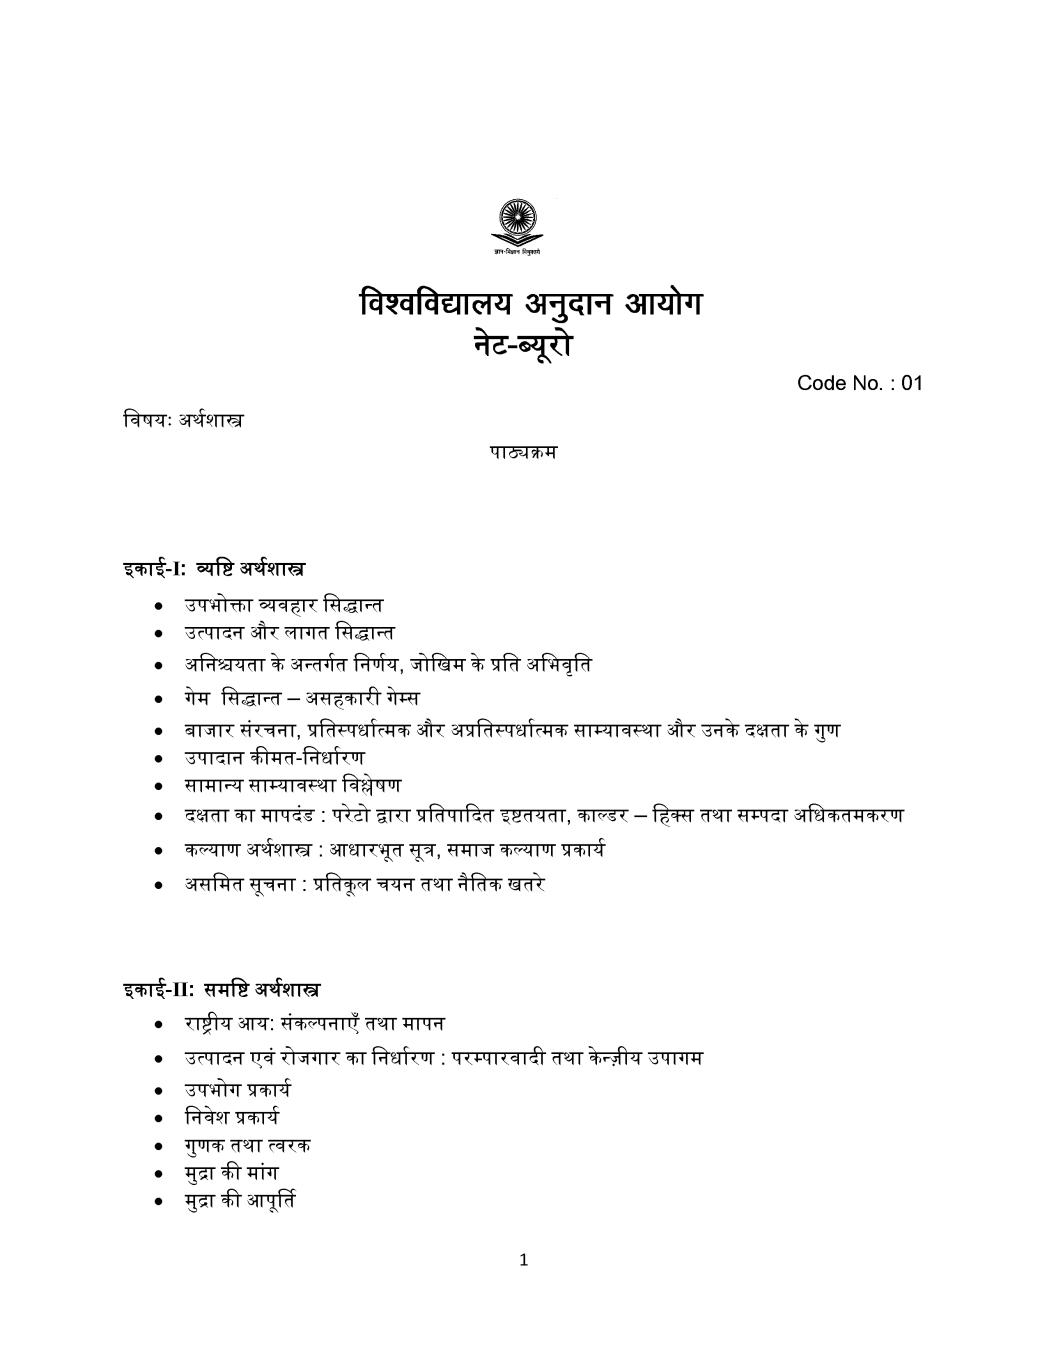 UGC NET Syllabus for Economics 2020 in Hindi - Page 1